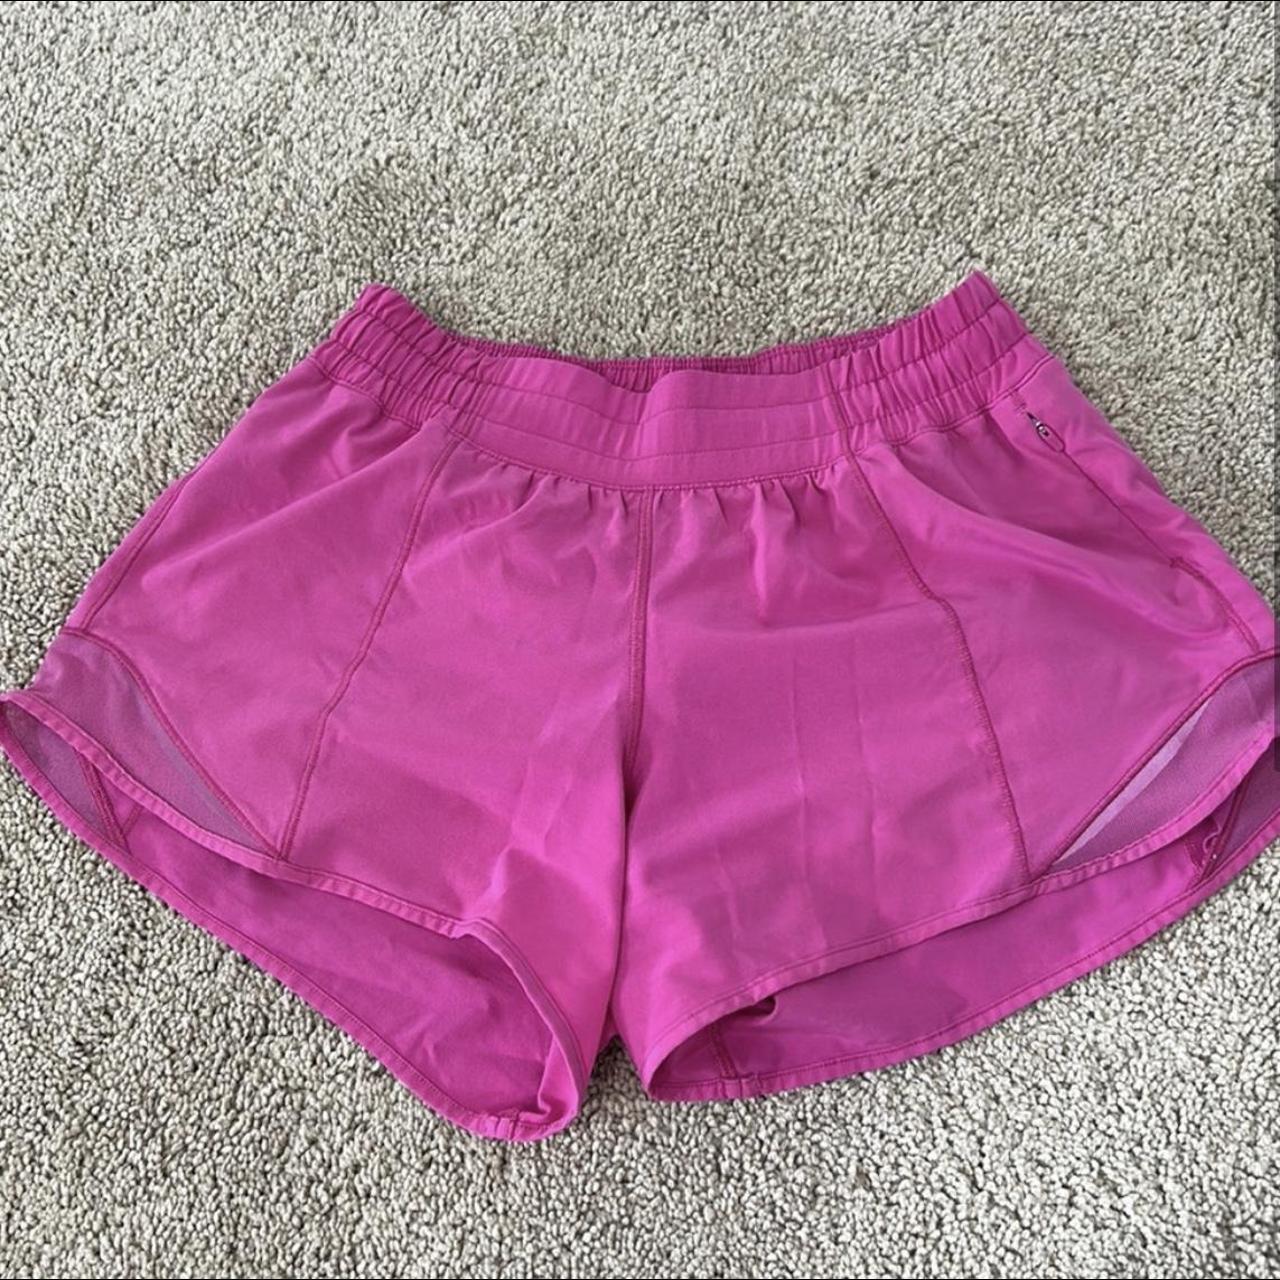 Lululemon Sonic Pink Shorts - Gem